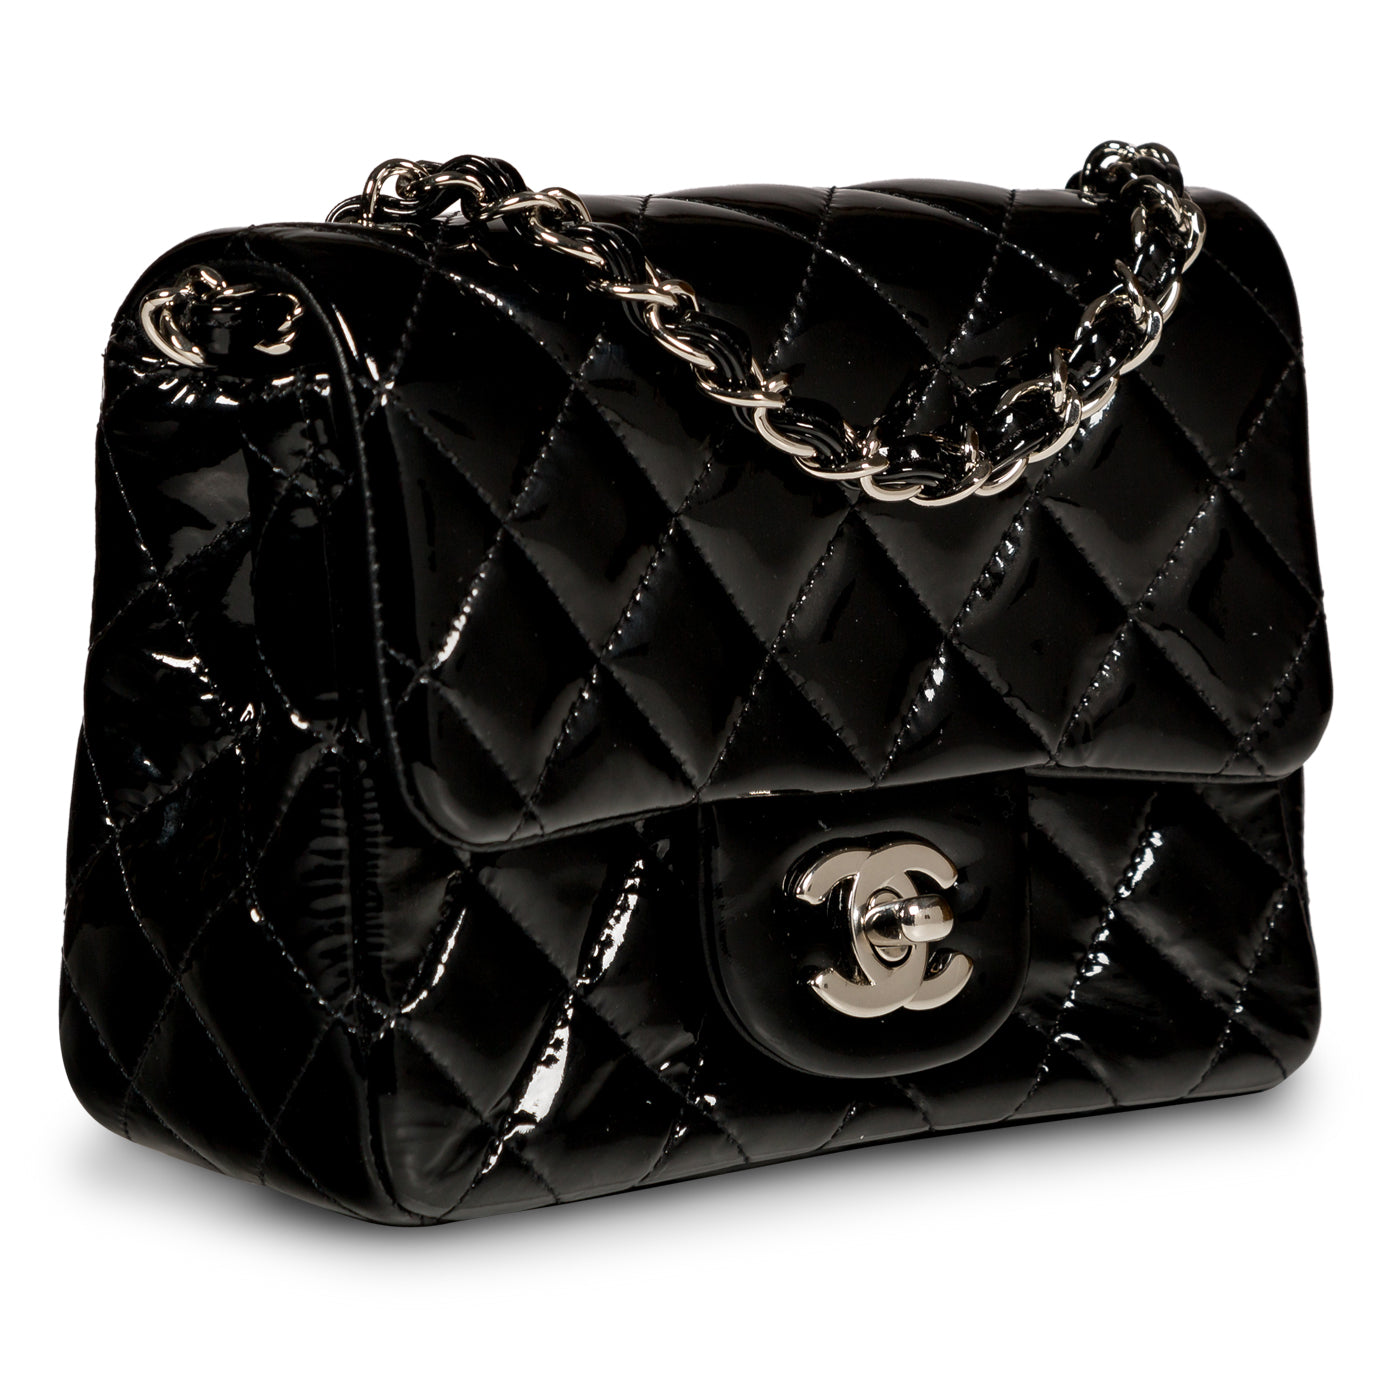 Chanel - Mini Square Classic Flap Bag - Black Patent - SHW - Pre